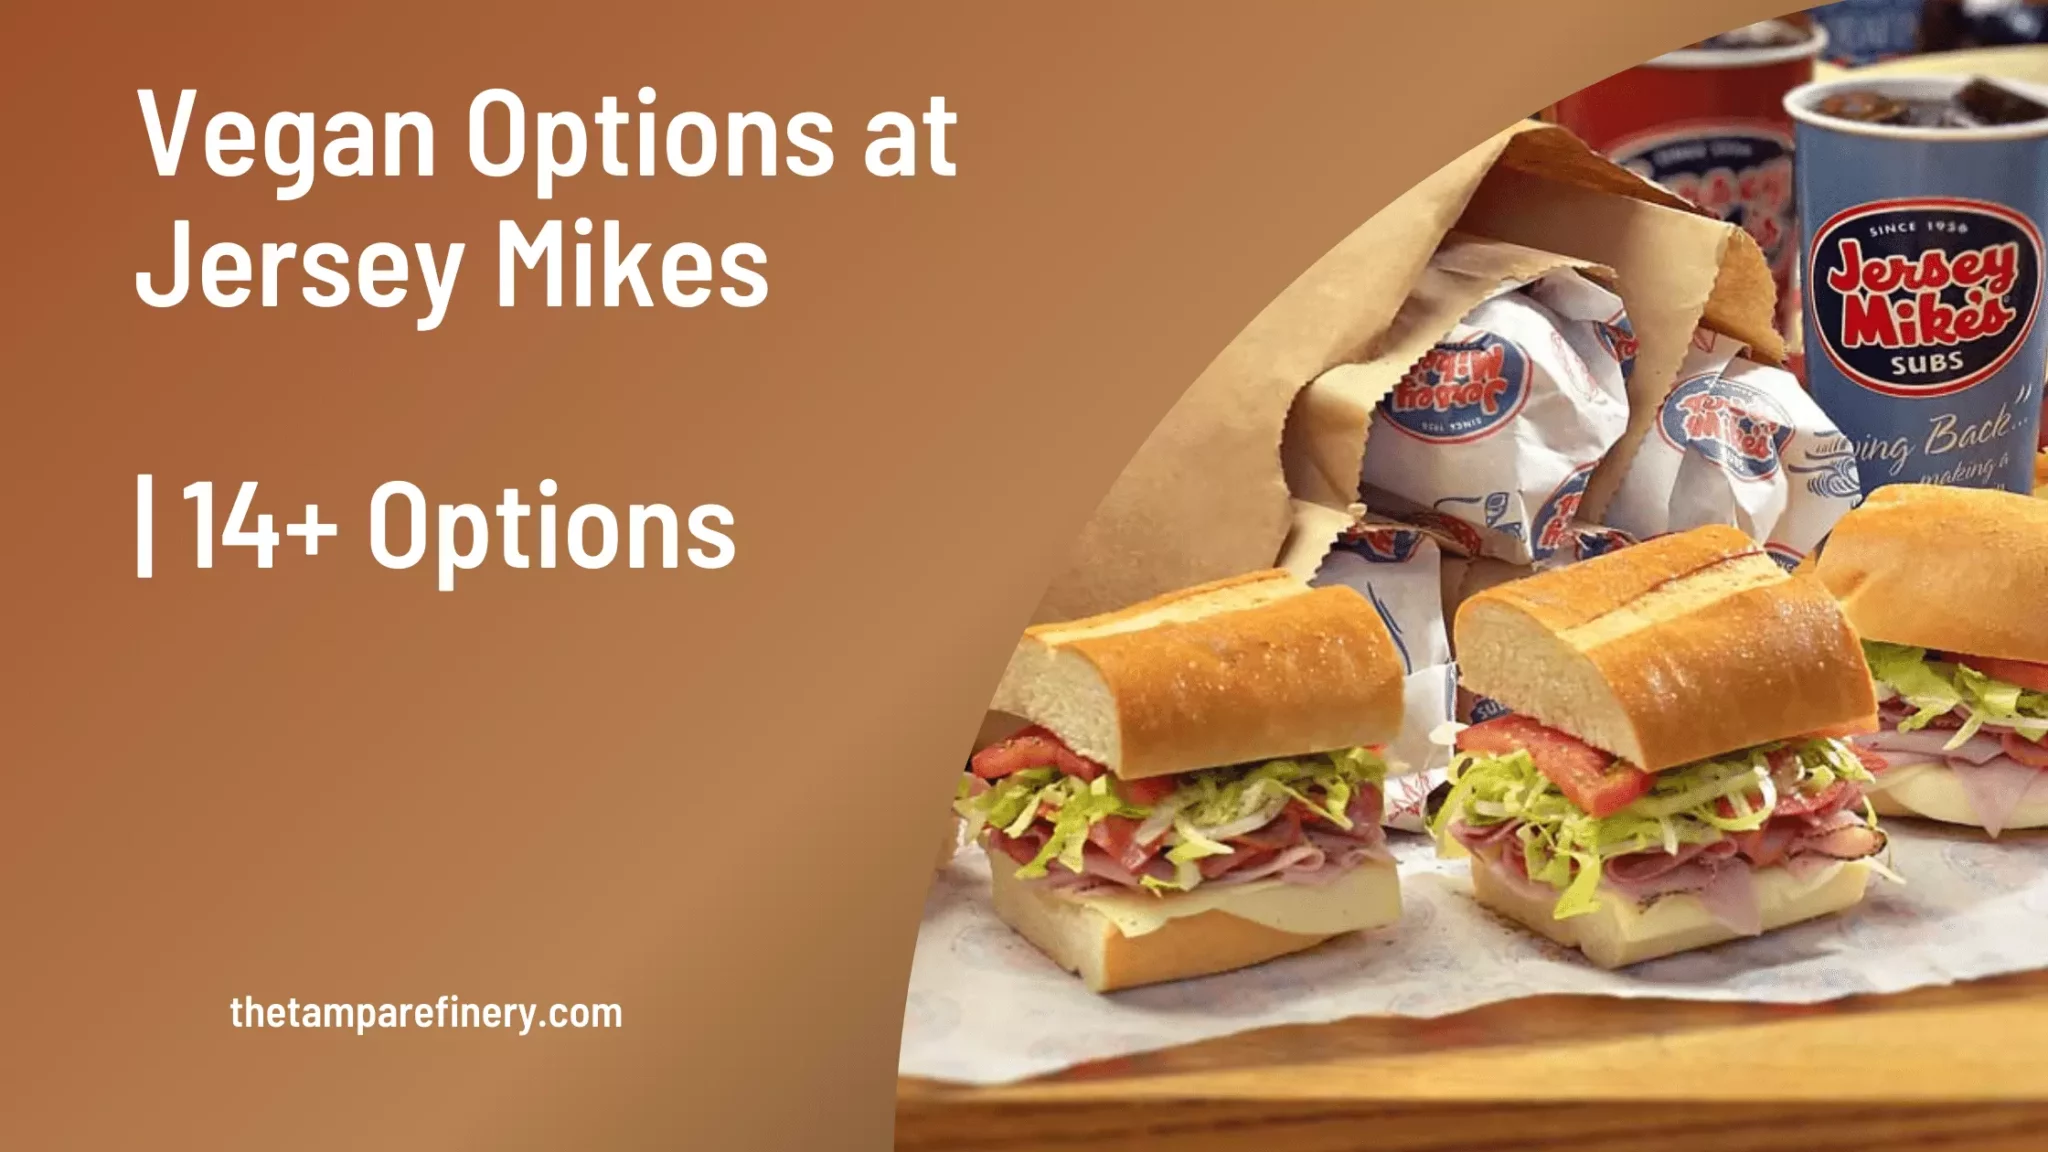 Vegan Options at Jersey Mikes